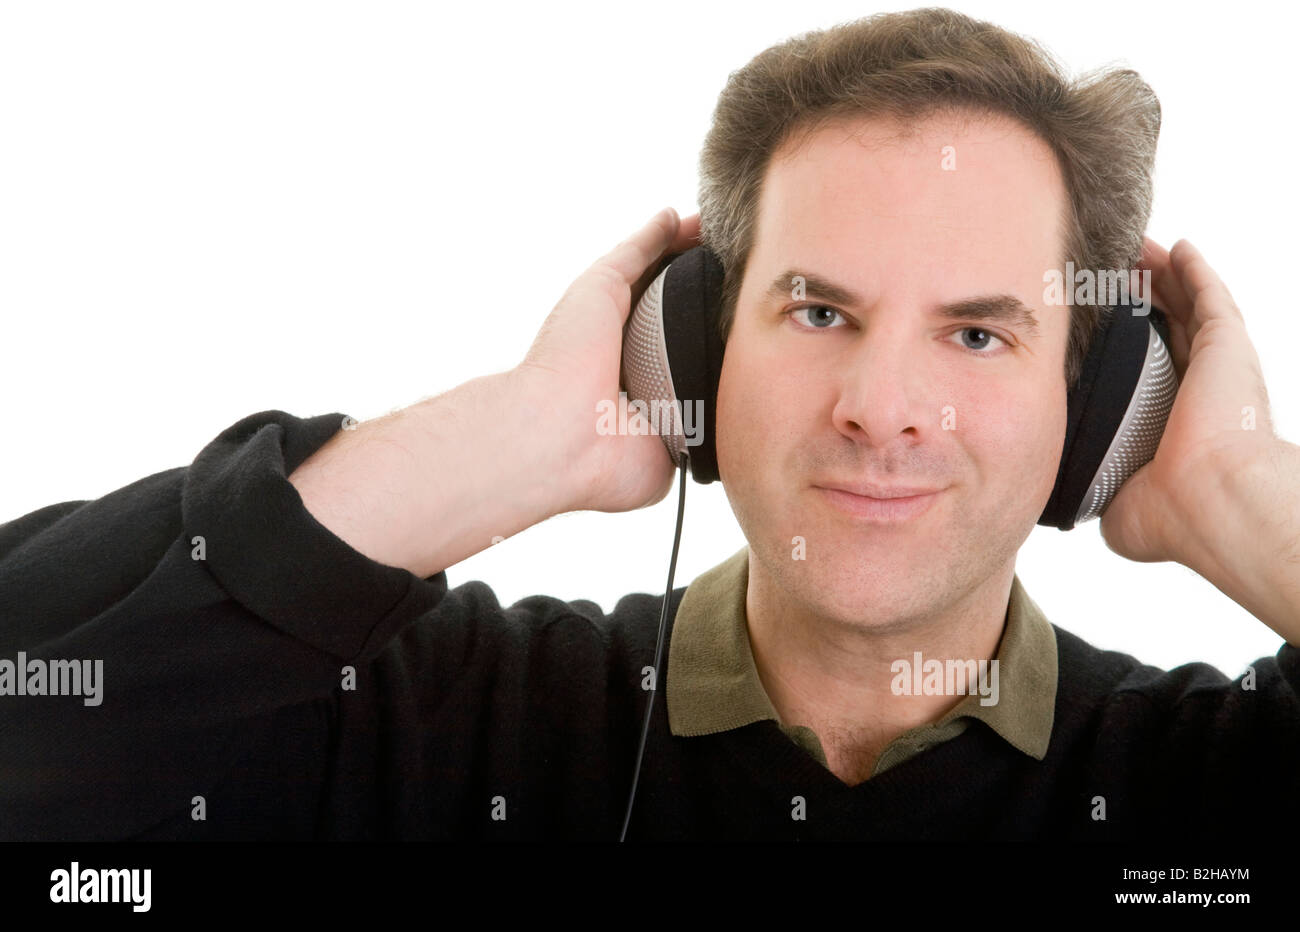 man headphone music concentrative hearing hi fi audio pop music musical dj diskjockey entertainment Stock Photo